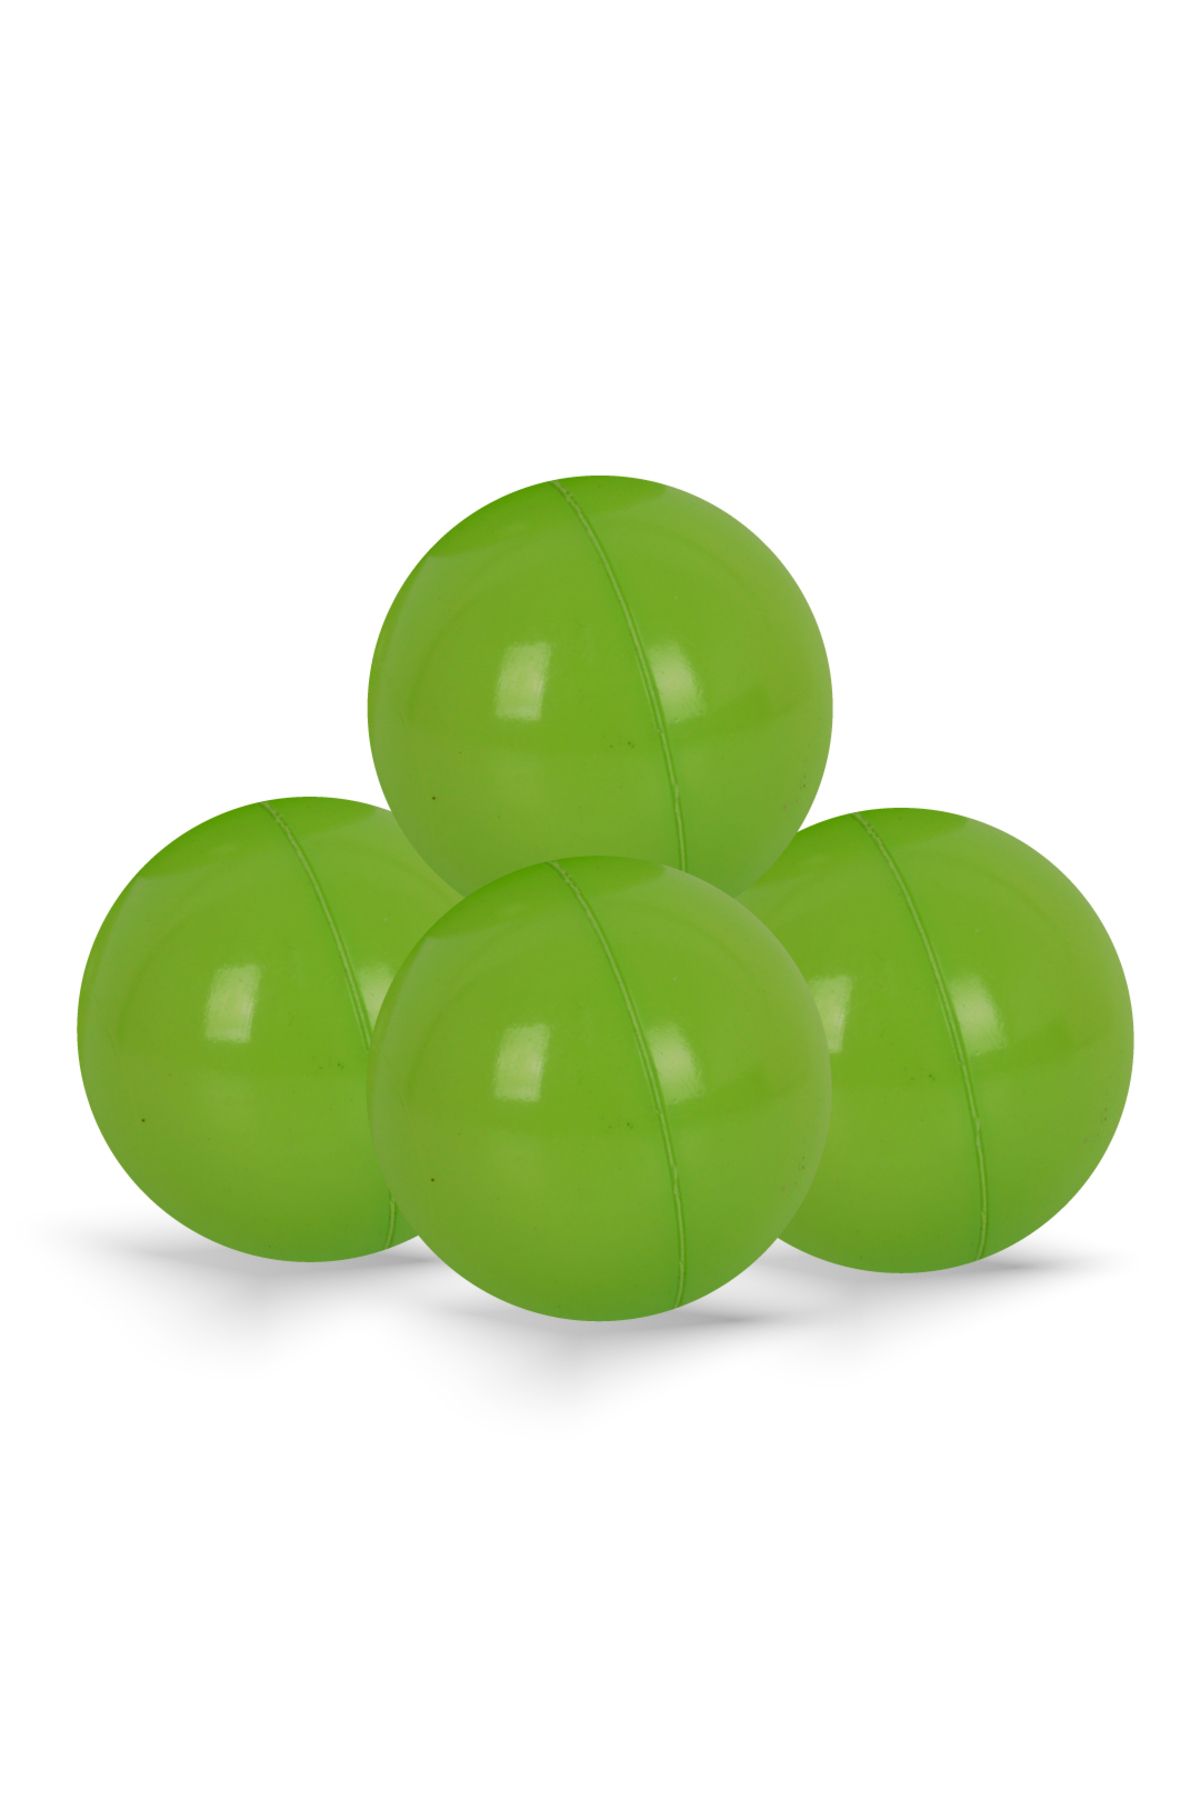 Afacanpark Yeşil 7 Cm 500 Adet - Oyun Topu - Havuz Topu - Çocuk Oyun Su Topu